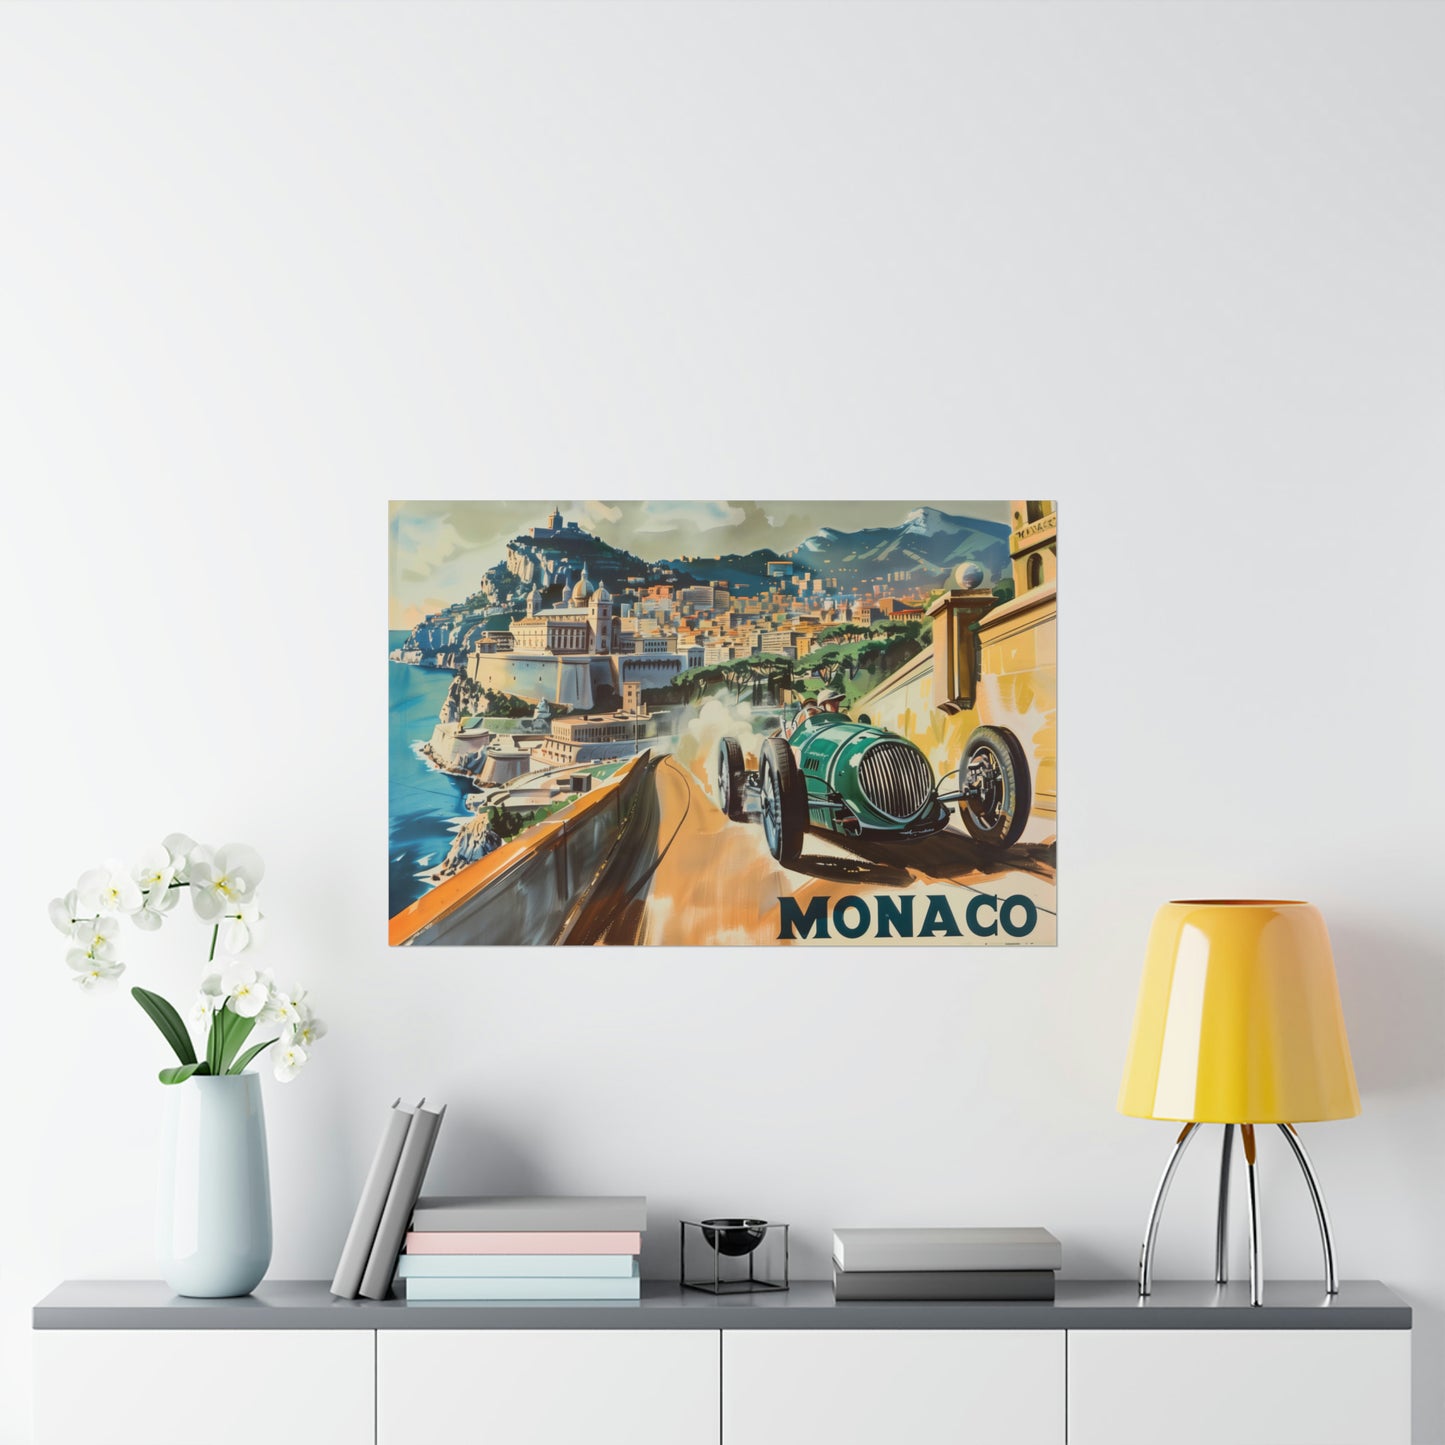 Monaco Poster Print, France Race Car Castle Vintage Retro Wall Image Art Horizontal Travel Paper Artwork Small Large Room Office Decor